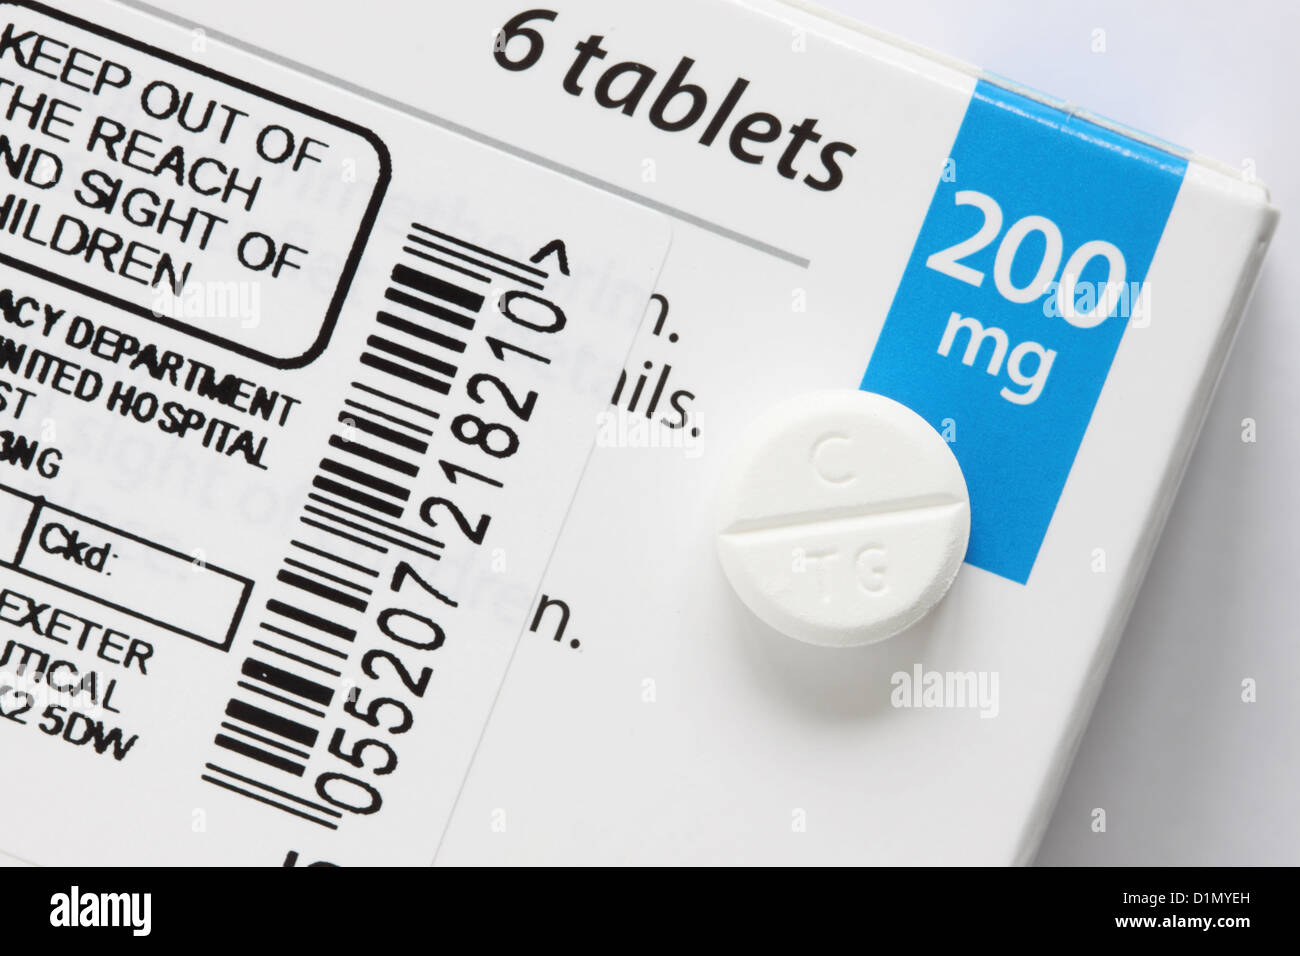 Trimethoprim antibiotic tablets 200mg made by Actavis Stock Photo - Alamy